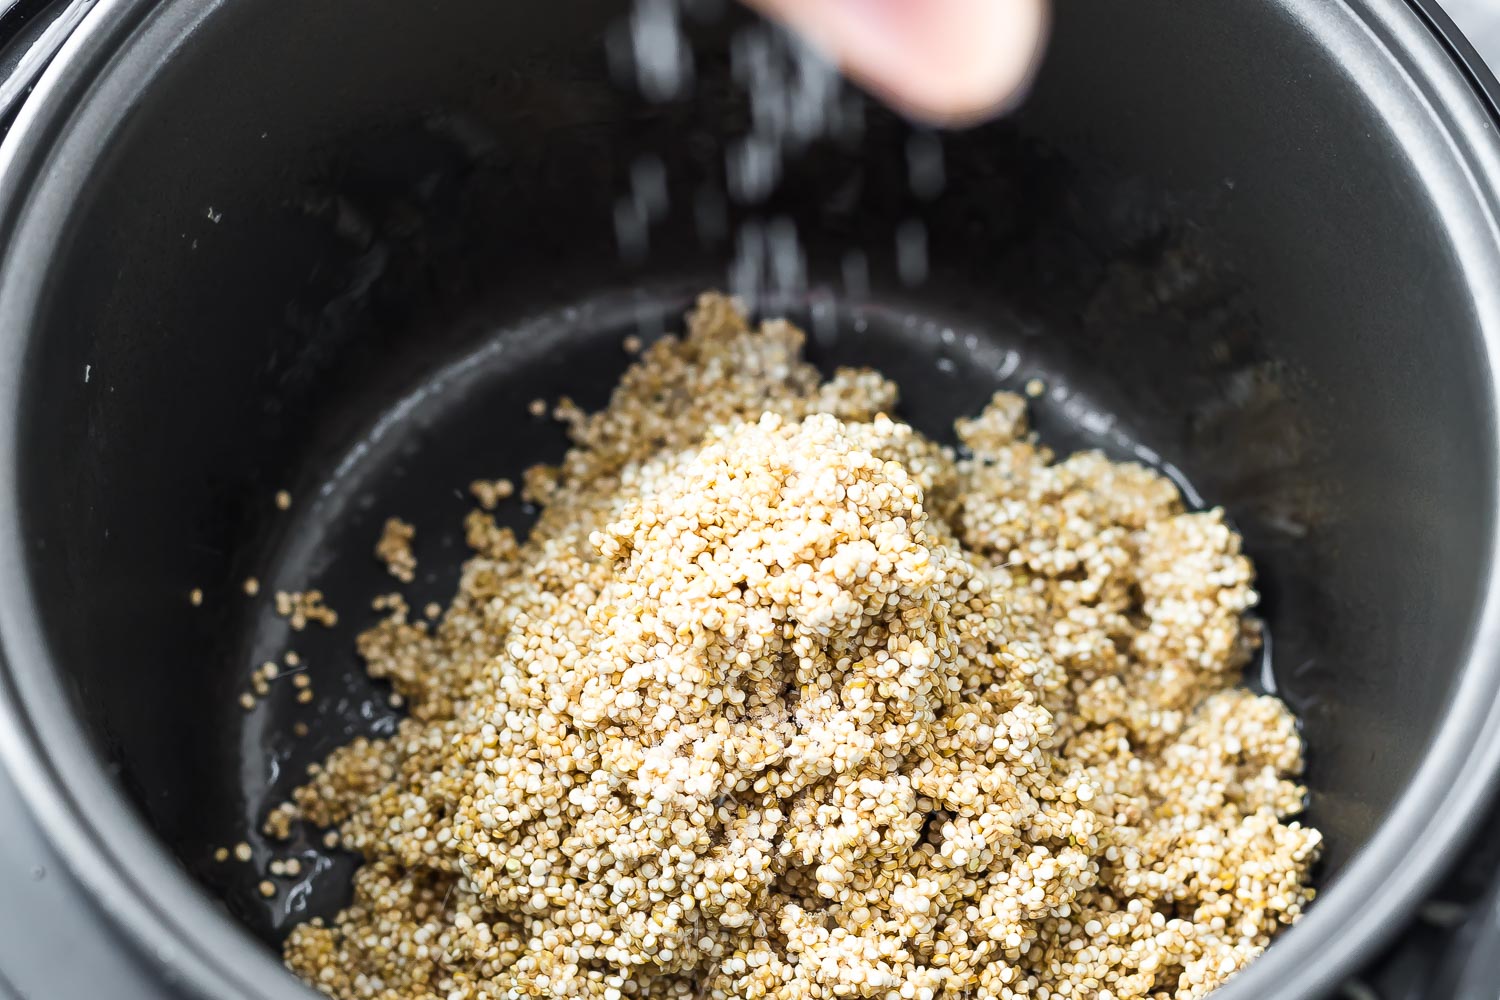 https://sweetpeasandsaffron.com/wp-content/uploads/2021/05/quinoa-rice-cooker-2.jpg